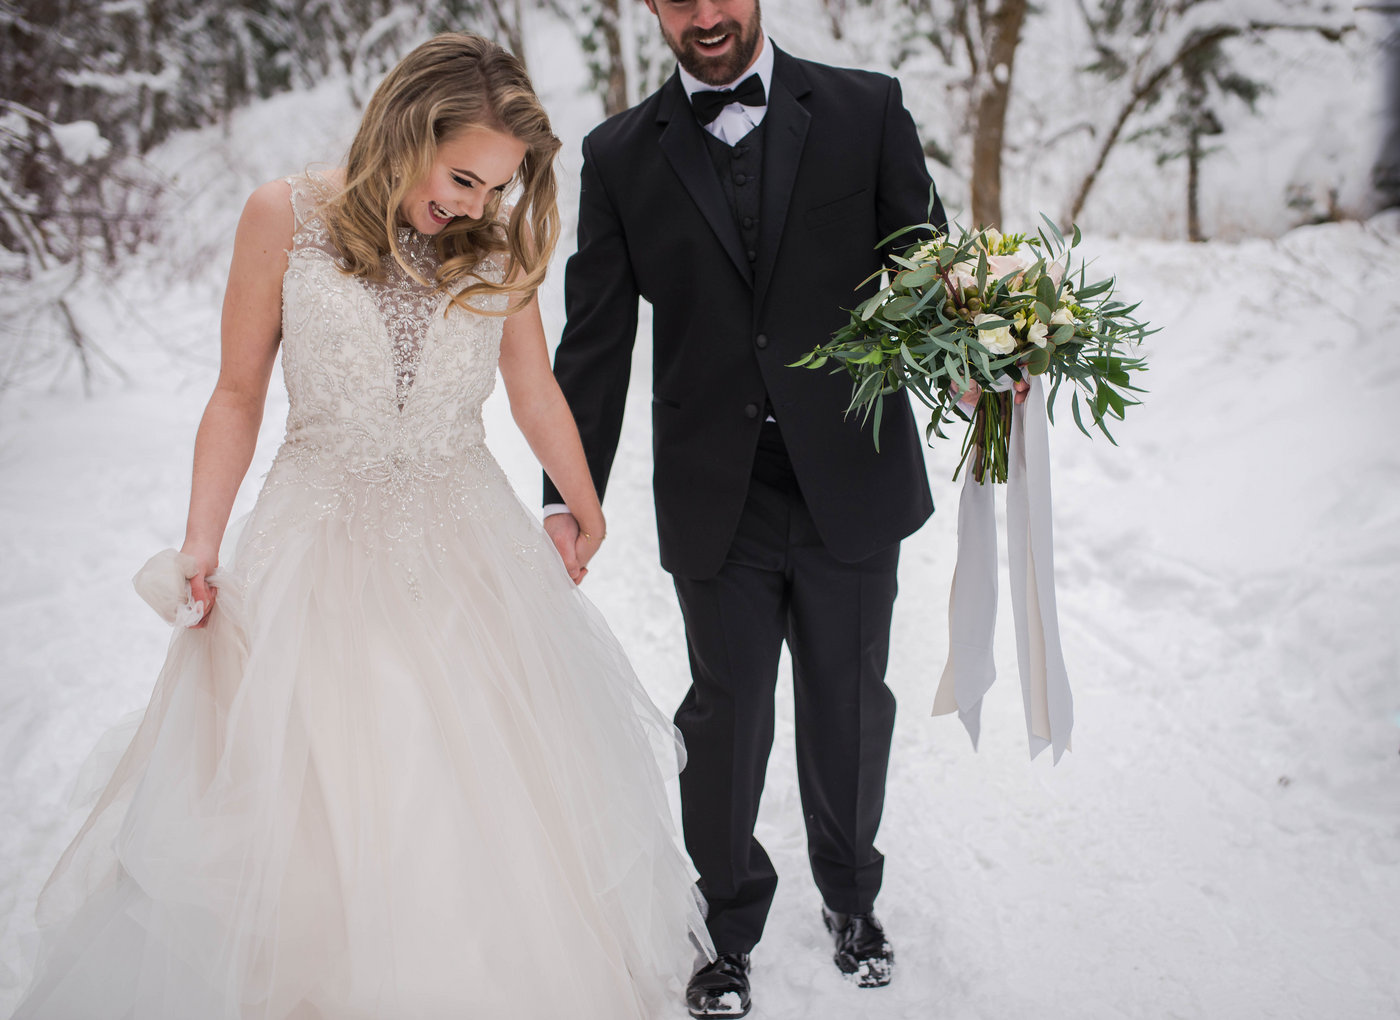 Bitsy Bridal-Utah Photographer-Utah Wedding Photographer-Snow bride (7).jpg